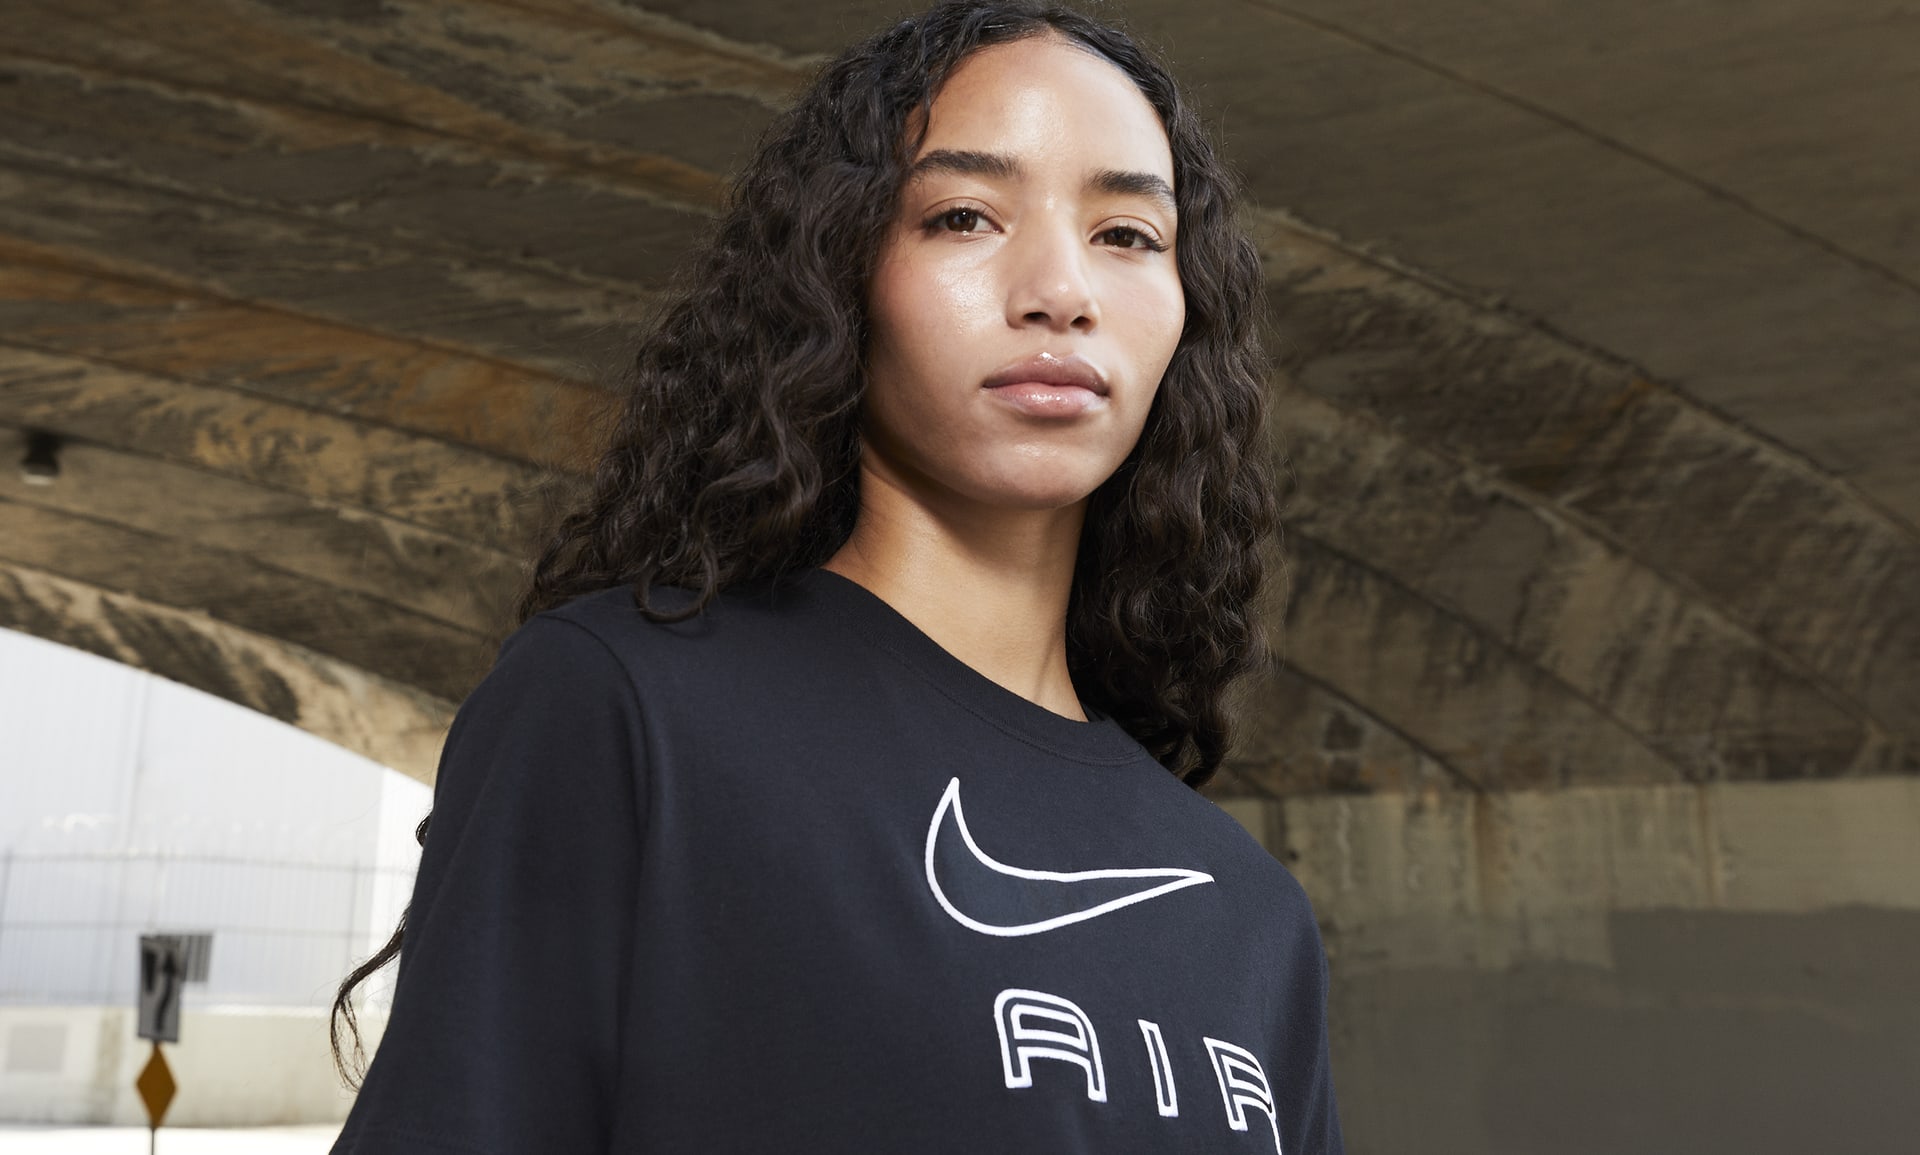 Nike Air Women's T-Shirt.